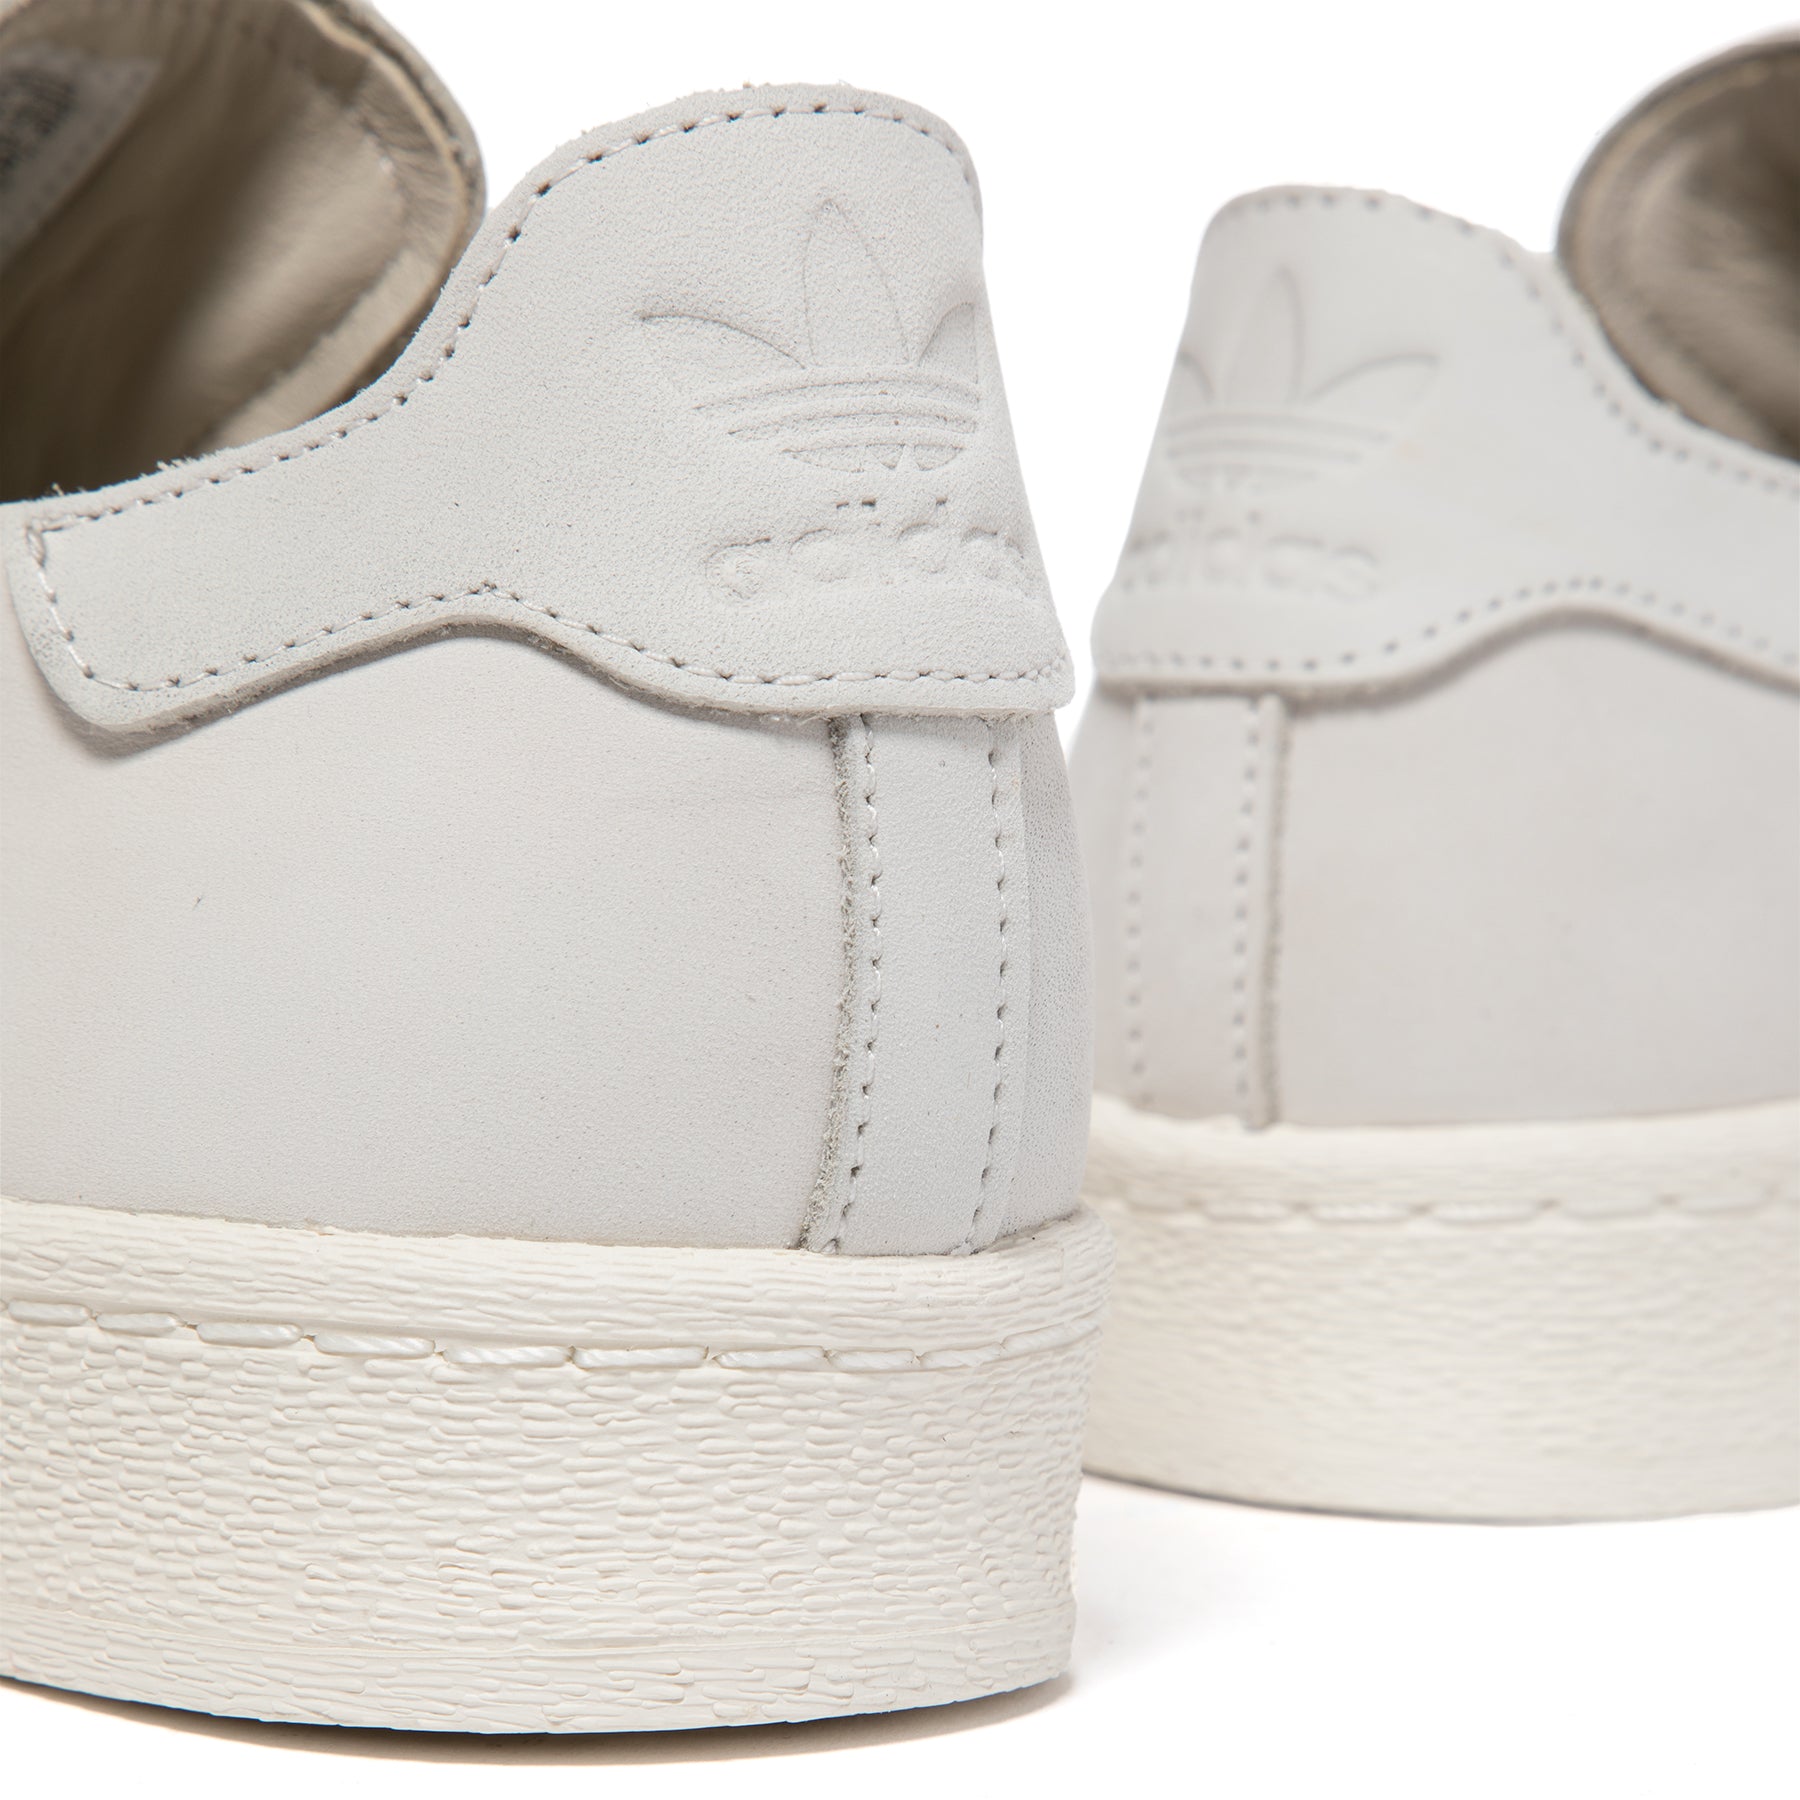 Adidas Superstar 82 Shoes Cloud White 11 - Men Lifestyle High Tops, color: Cloud White, size: 11